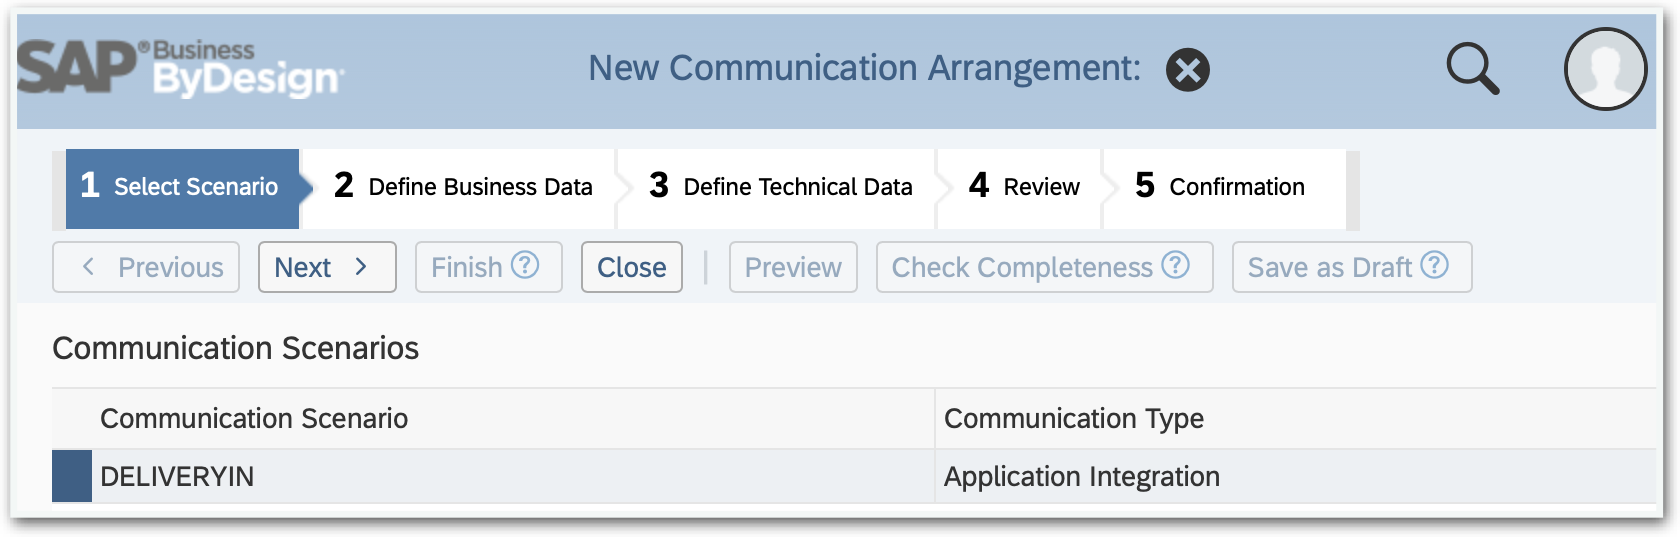 SAP Business ByDesign Communication Arrangement #1